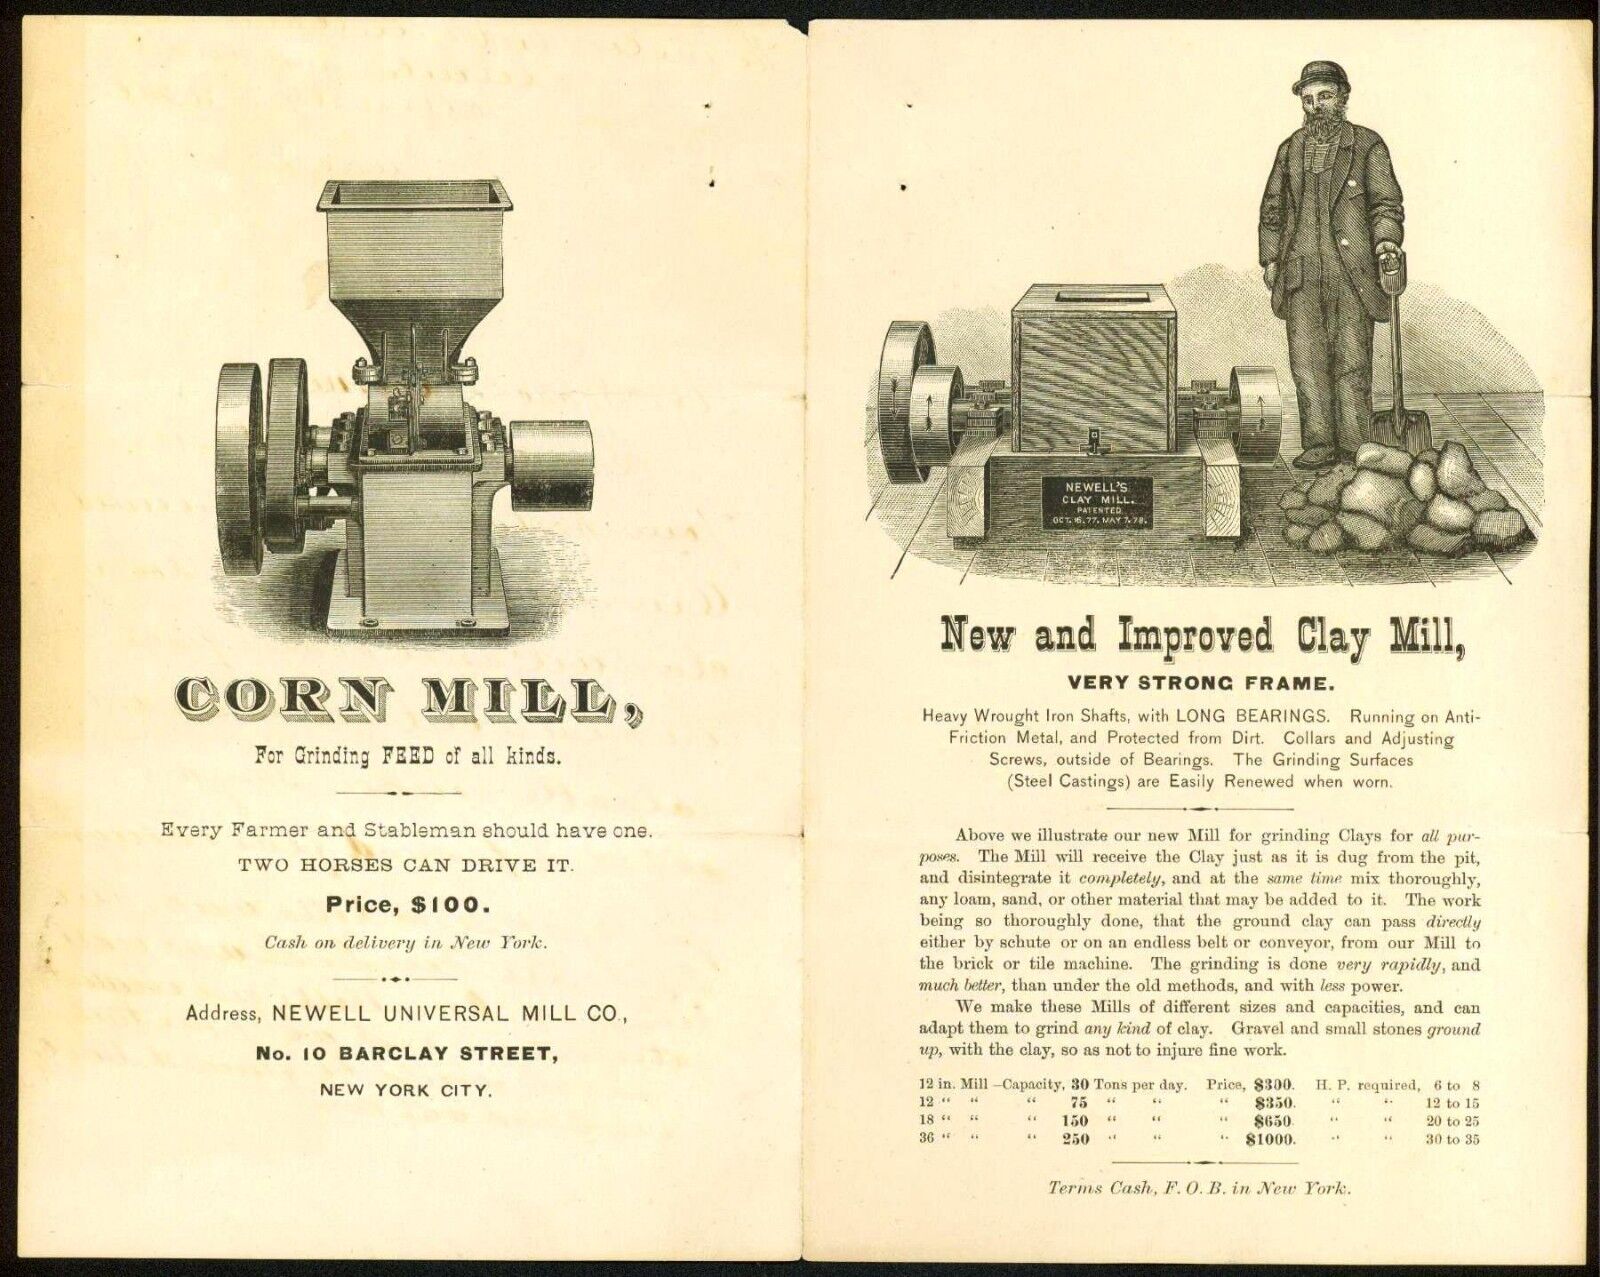 New York c1890 Newell Universal Mill Co Clay Mill Corn Mill Advertising Brochure